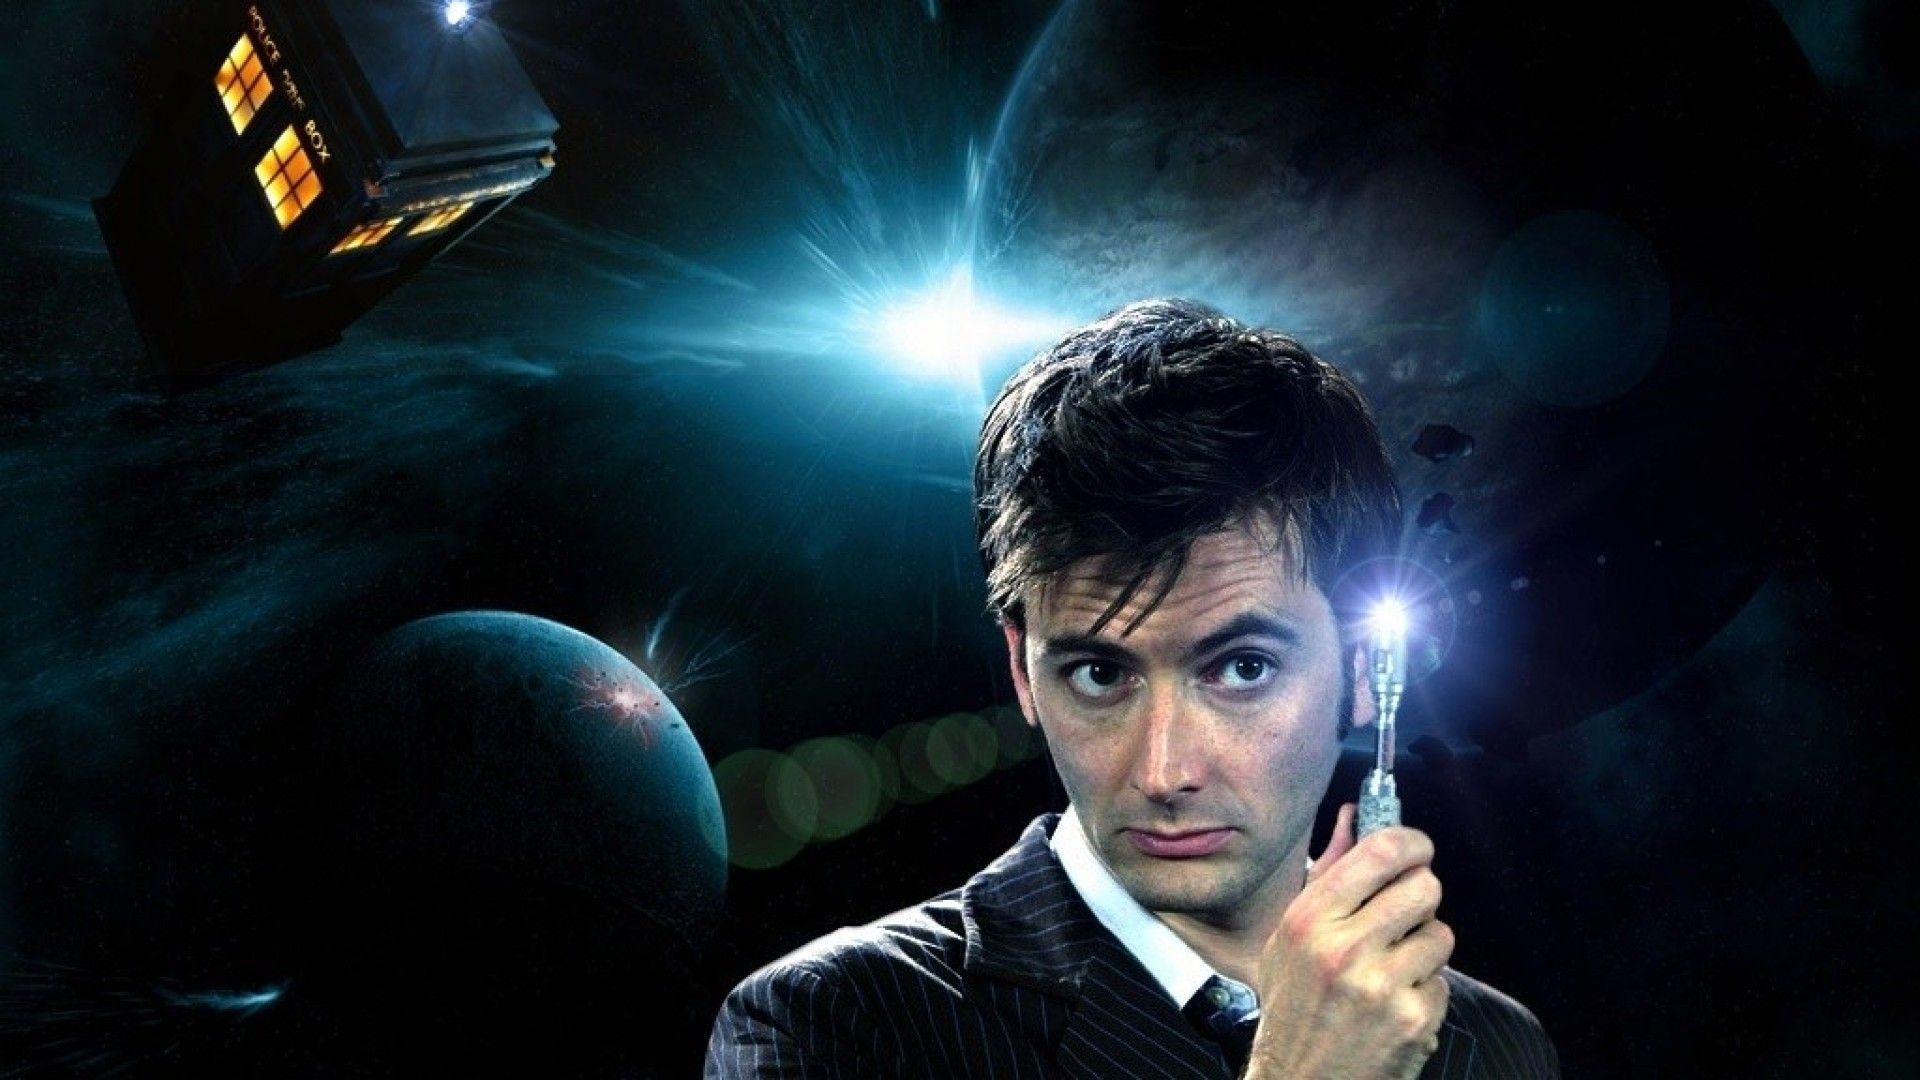 Doctor Who David Tennant Image Wallpaper HD